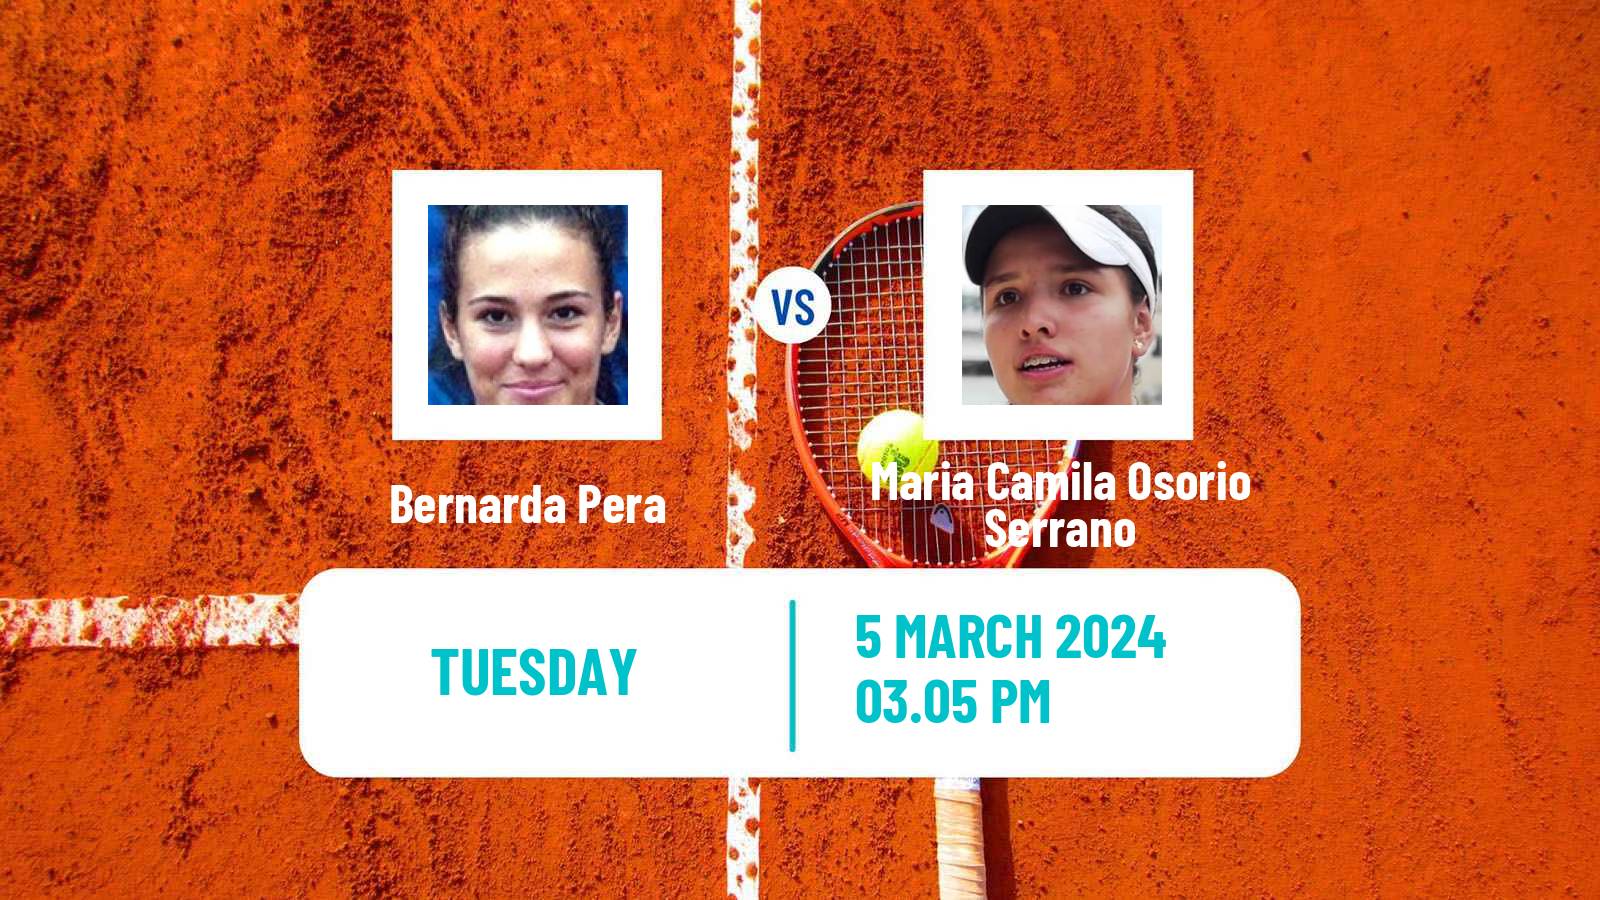 Tennis WTA Indian Wells Bernarda Pera - Maria Camila Osorio Serrano